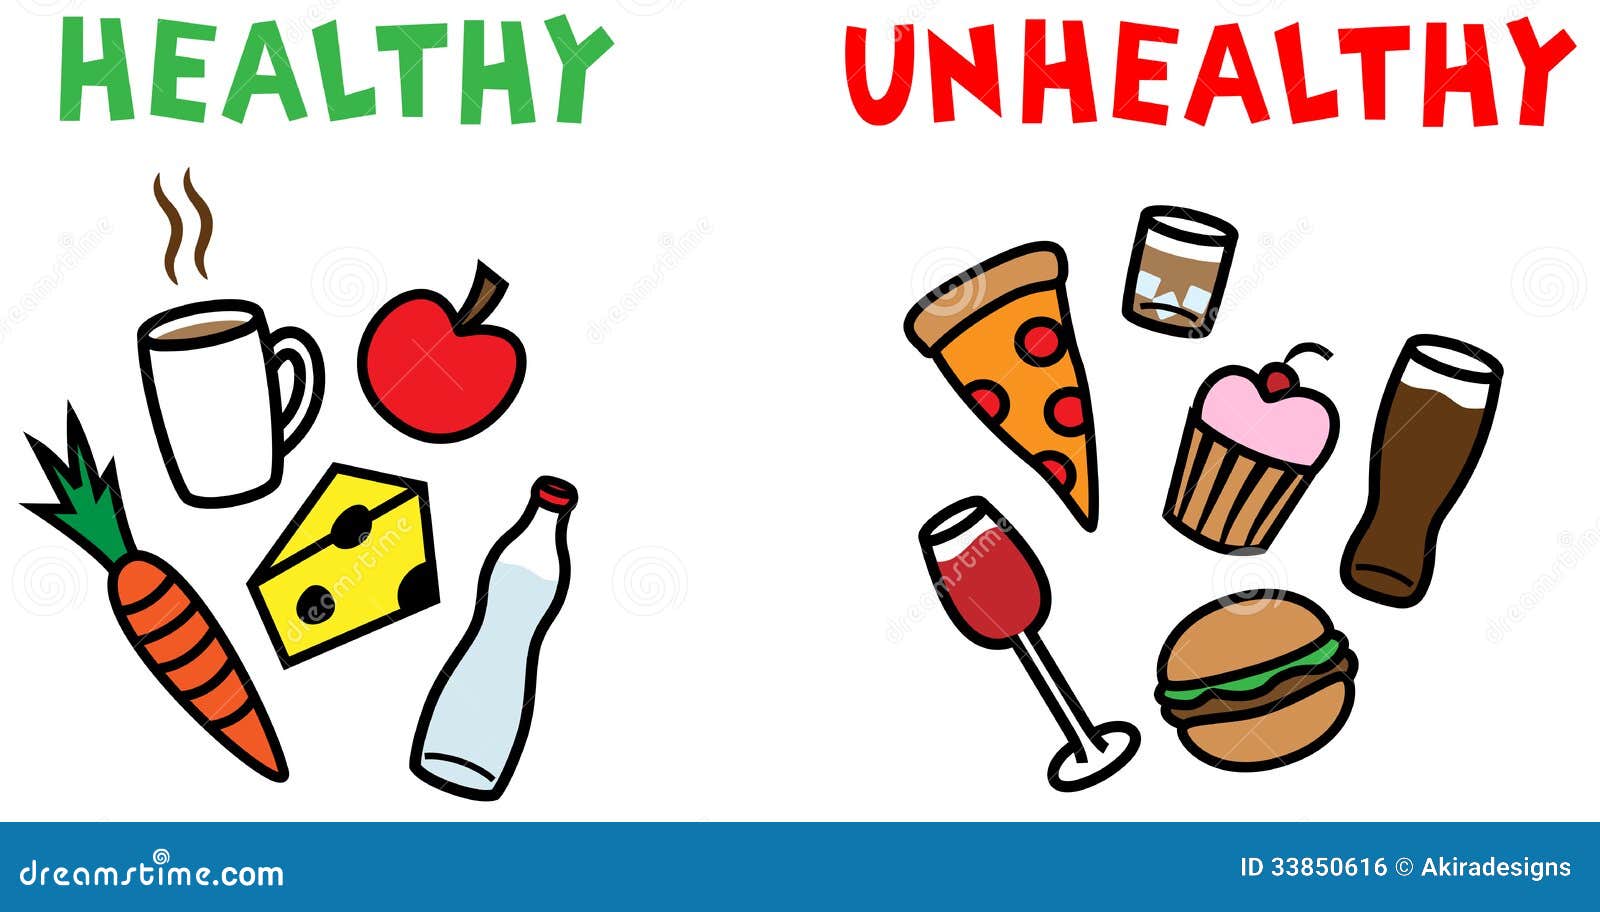 Cartoon Unhealthy Food Healthy and unhealthy food and